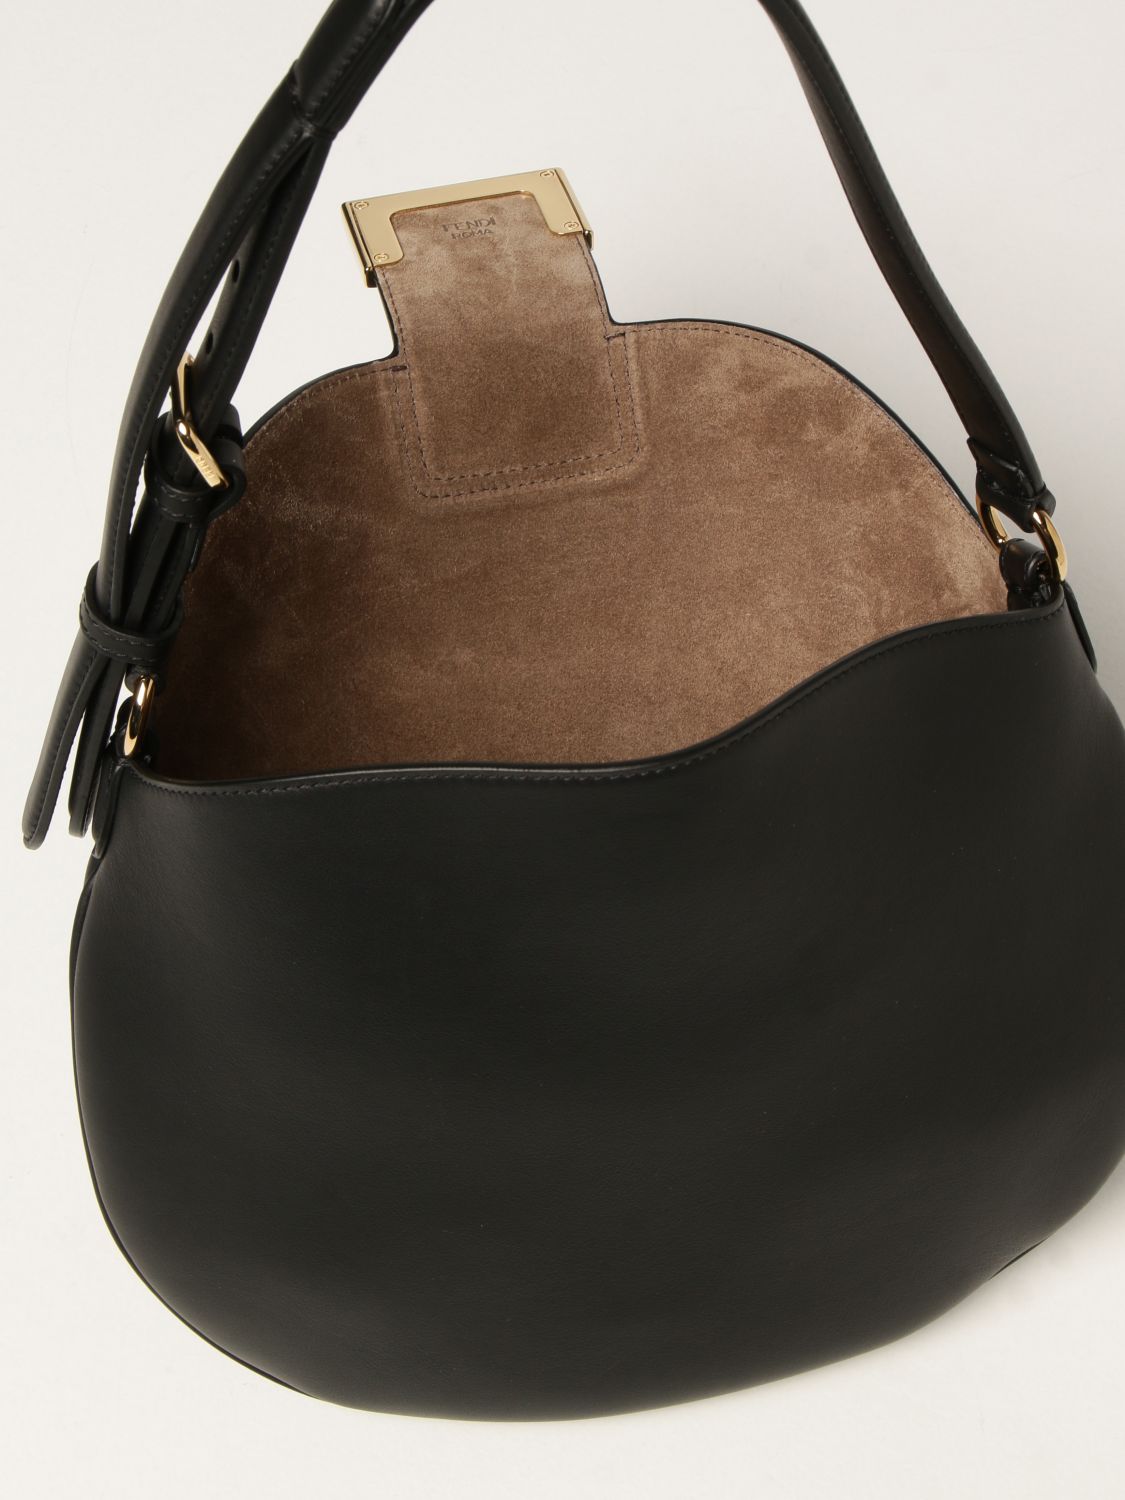 FENDI: Croissant leather bag | Shoulder Bag Fendi Women Black ...